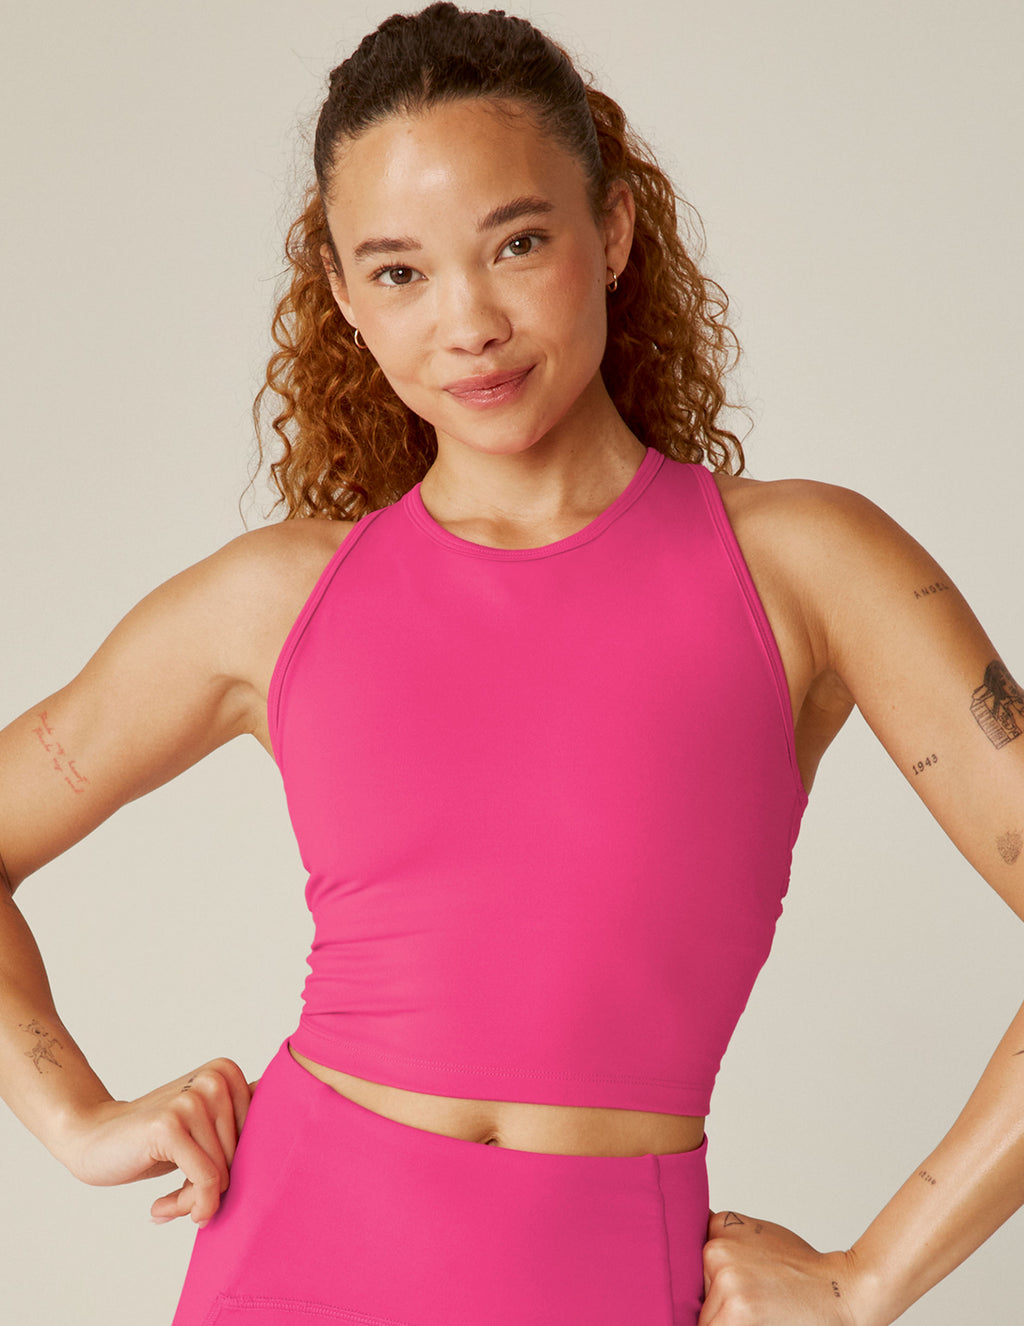 GetUSCart- Dragon Fit Women Sleeveless Yoga Tops Workout Cool T-Shirt  Running Short Tank Crop Tops (White, Small)